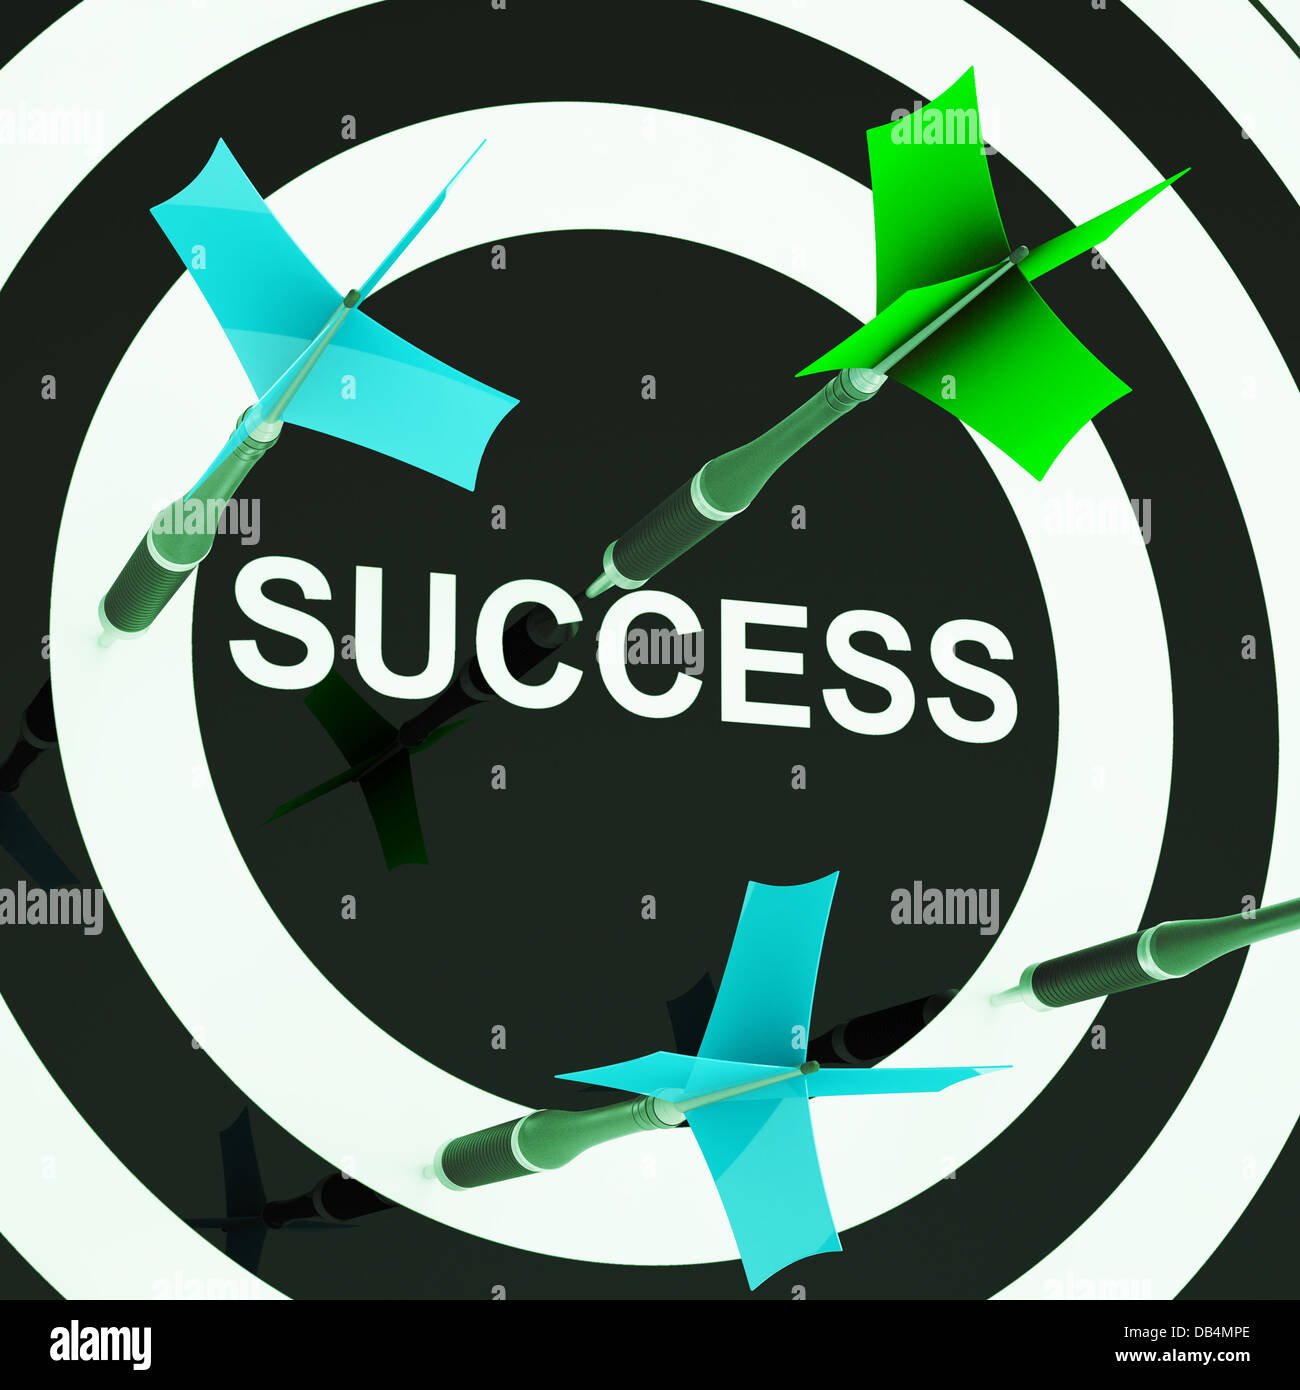 Success On Dartboard Shows Unsuccessful Goals Stock Photo